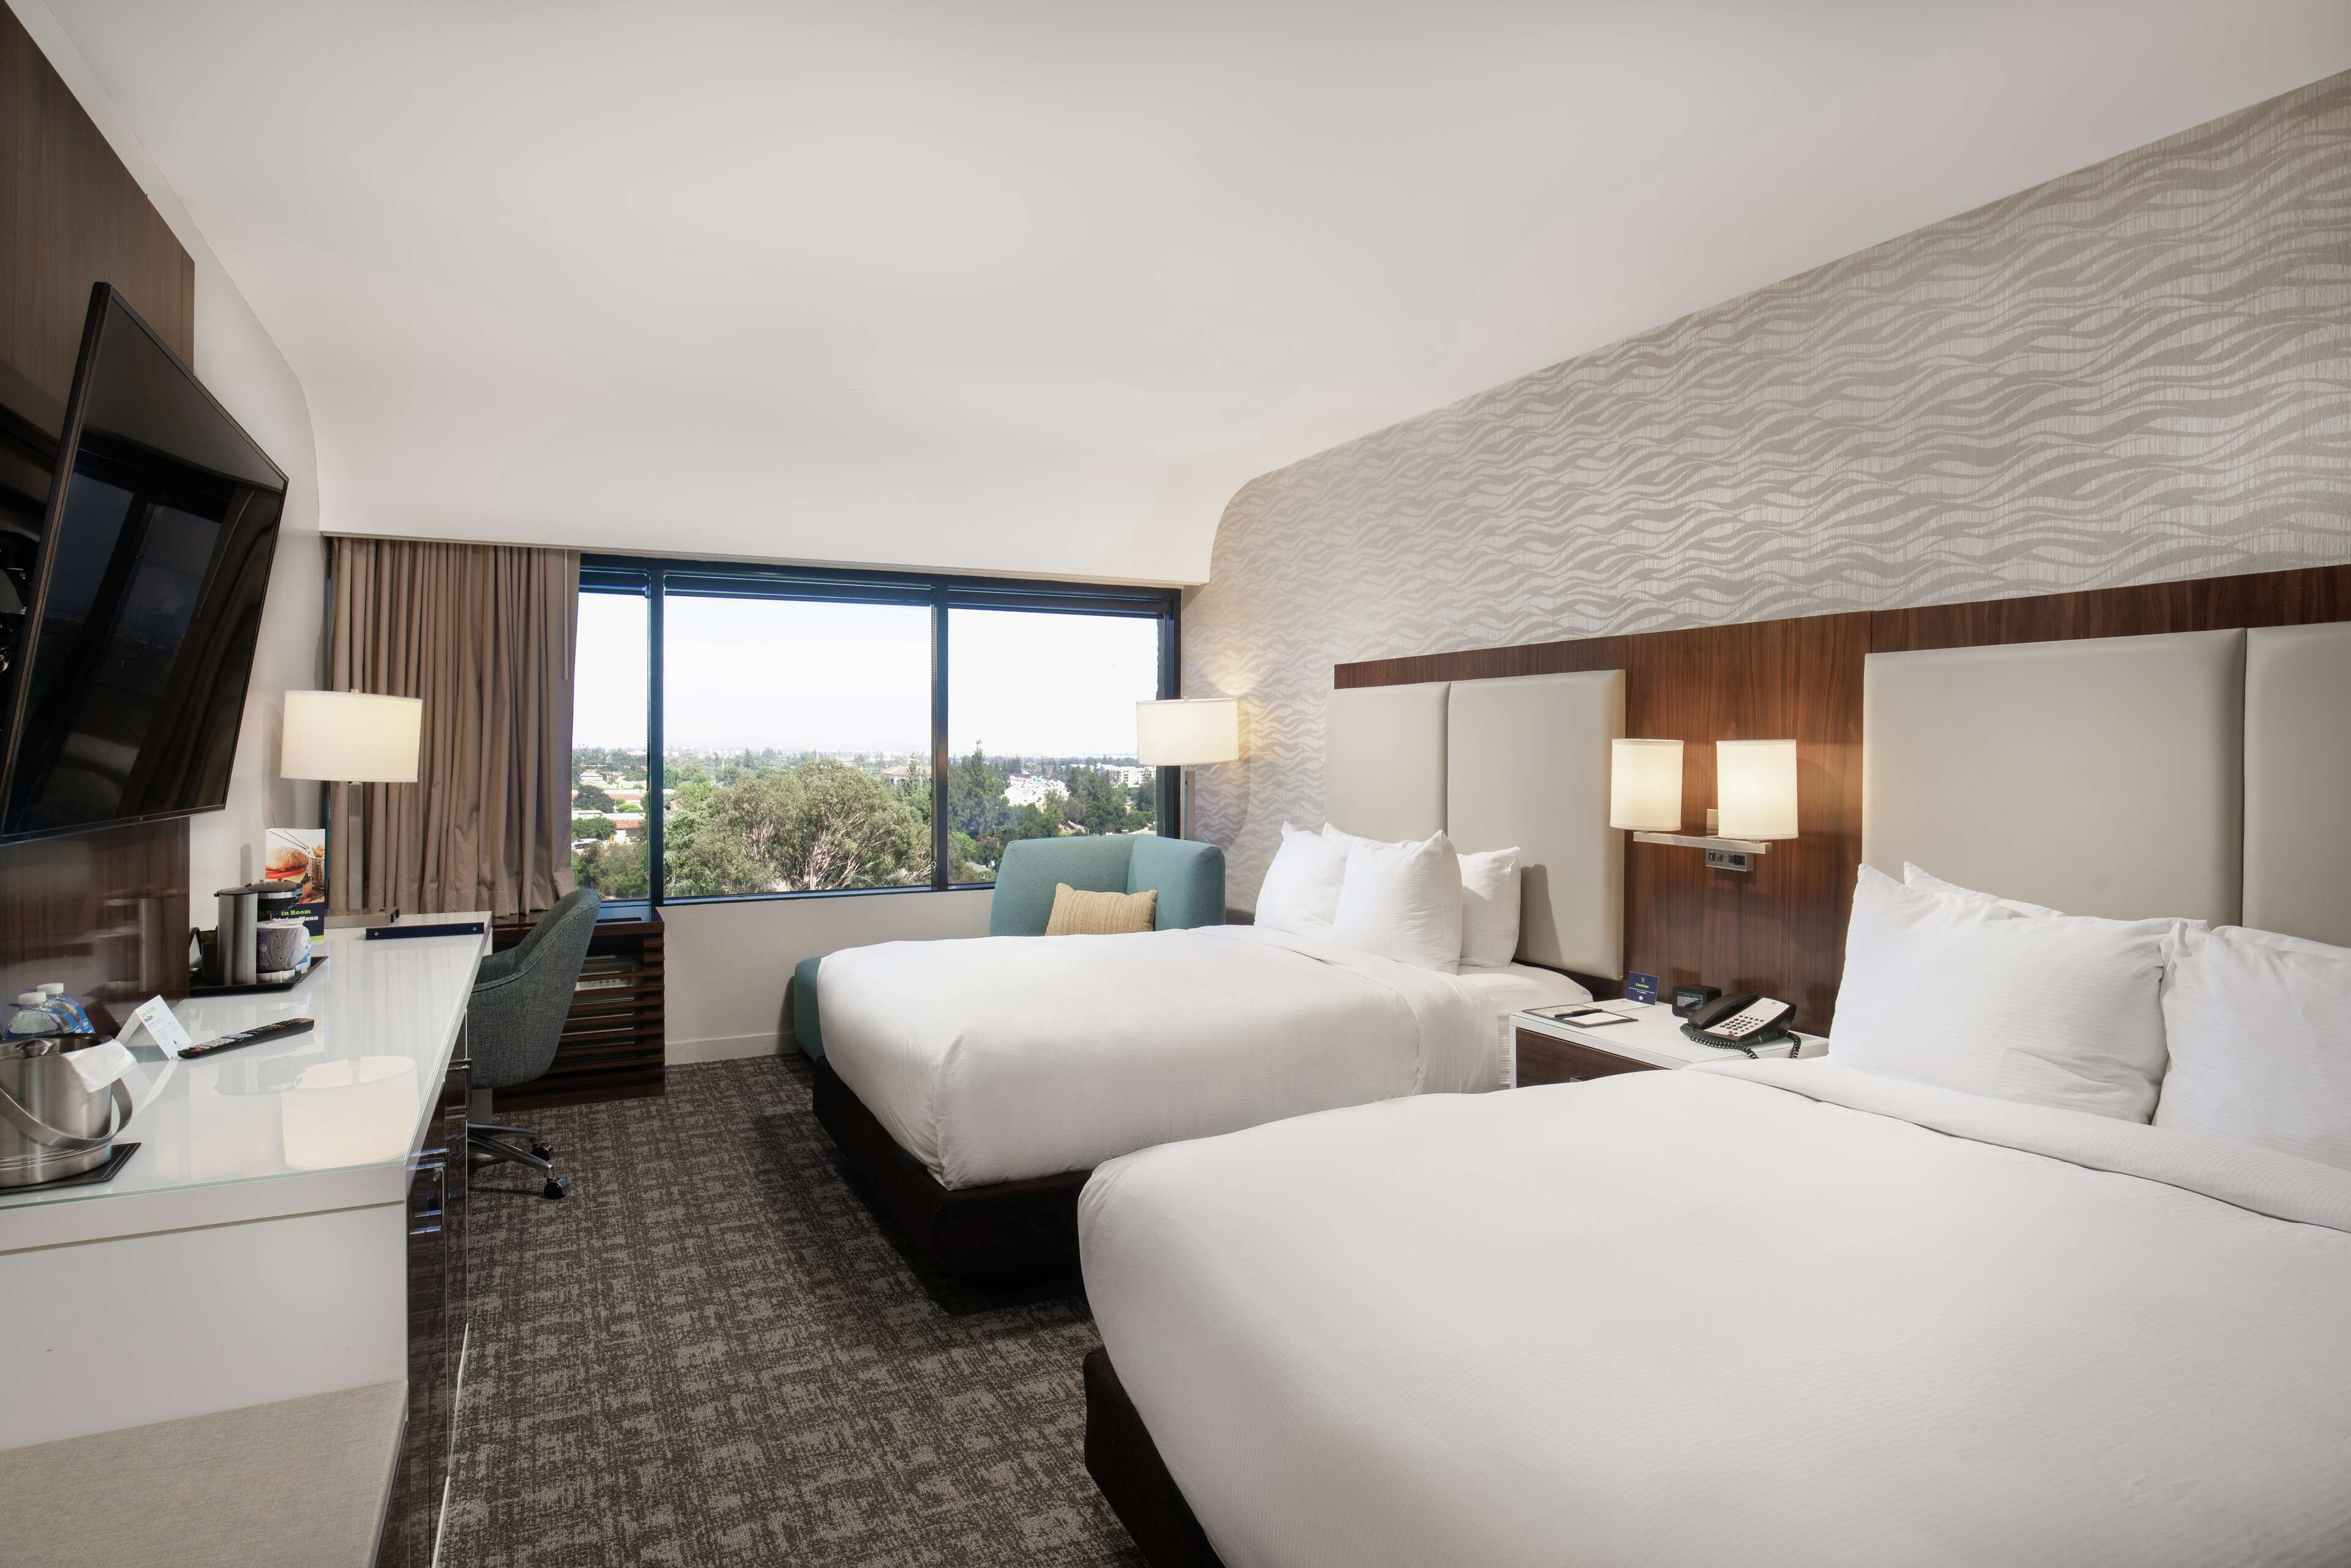 DoubleTree by Hilton Hotel Monrovia - Pasadena Area